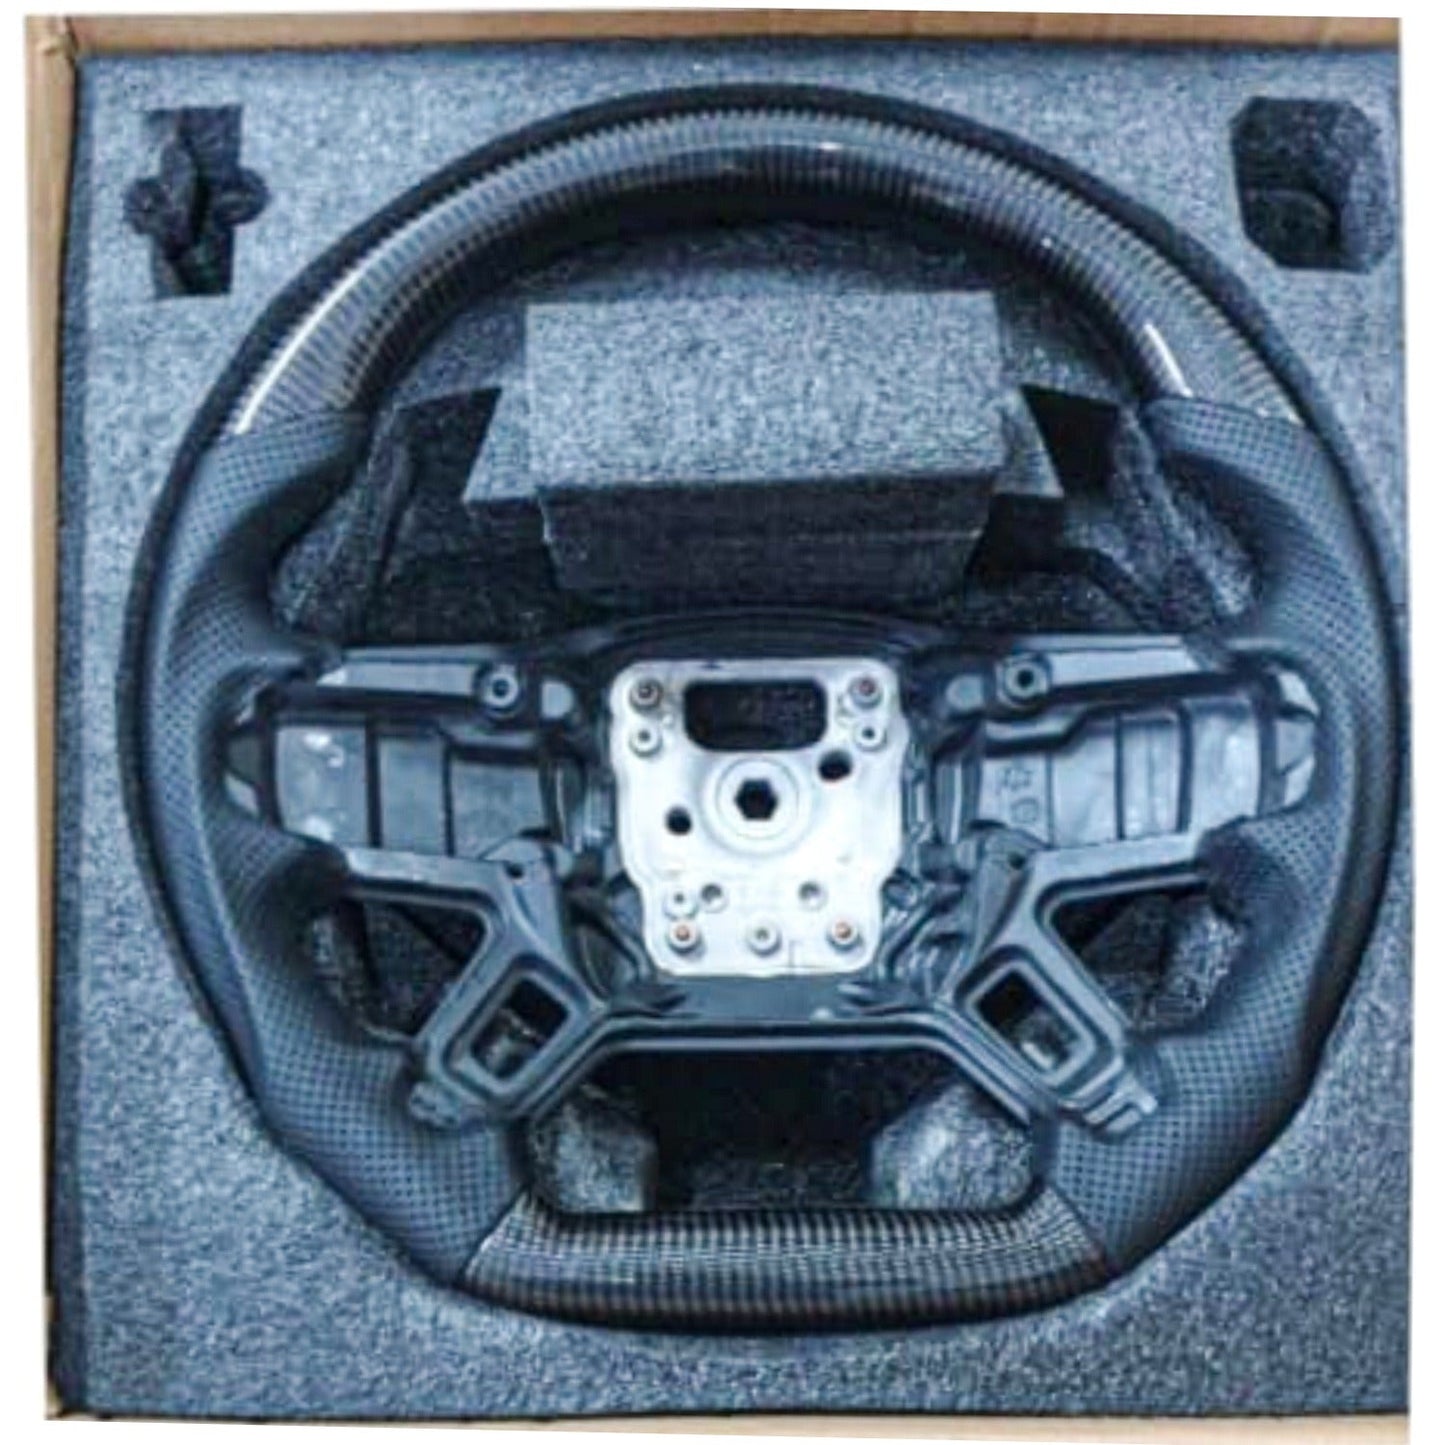 
                  
                    Defender Carbon fibre steering wheel-STEERING CONTROL-RETRO SOLUTIONS-CARPLUS
                  
                